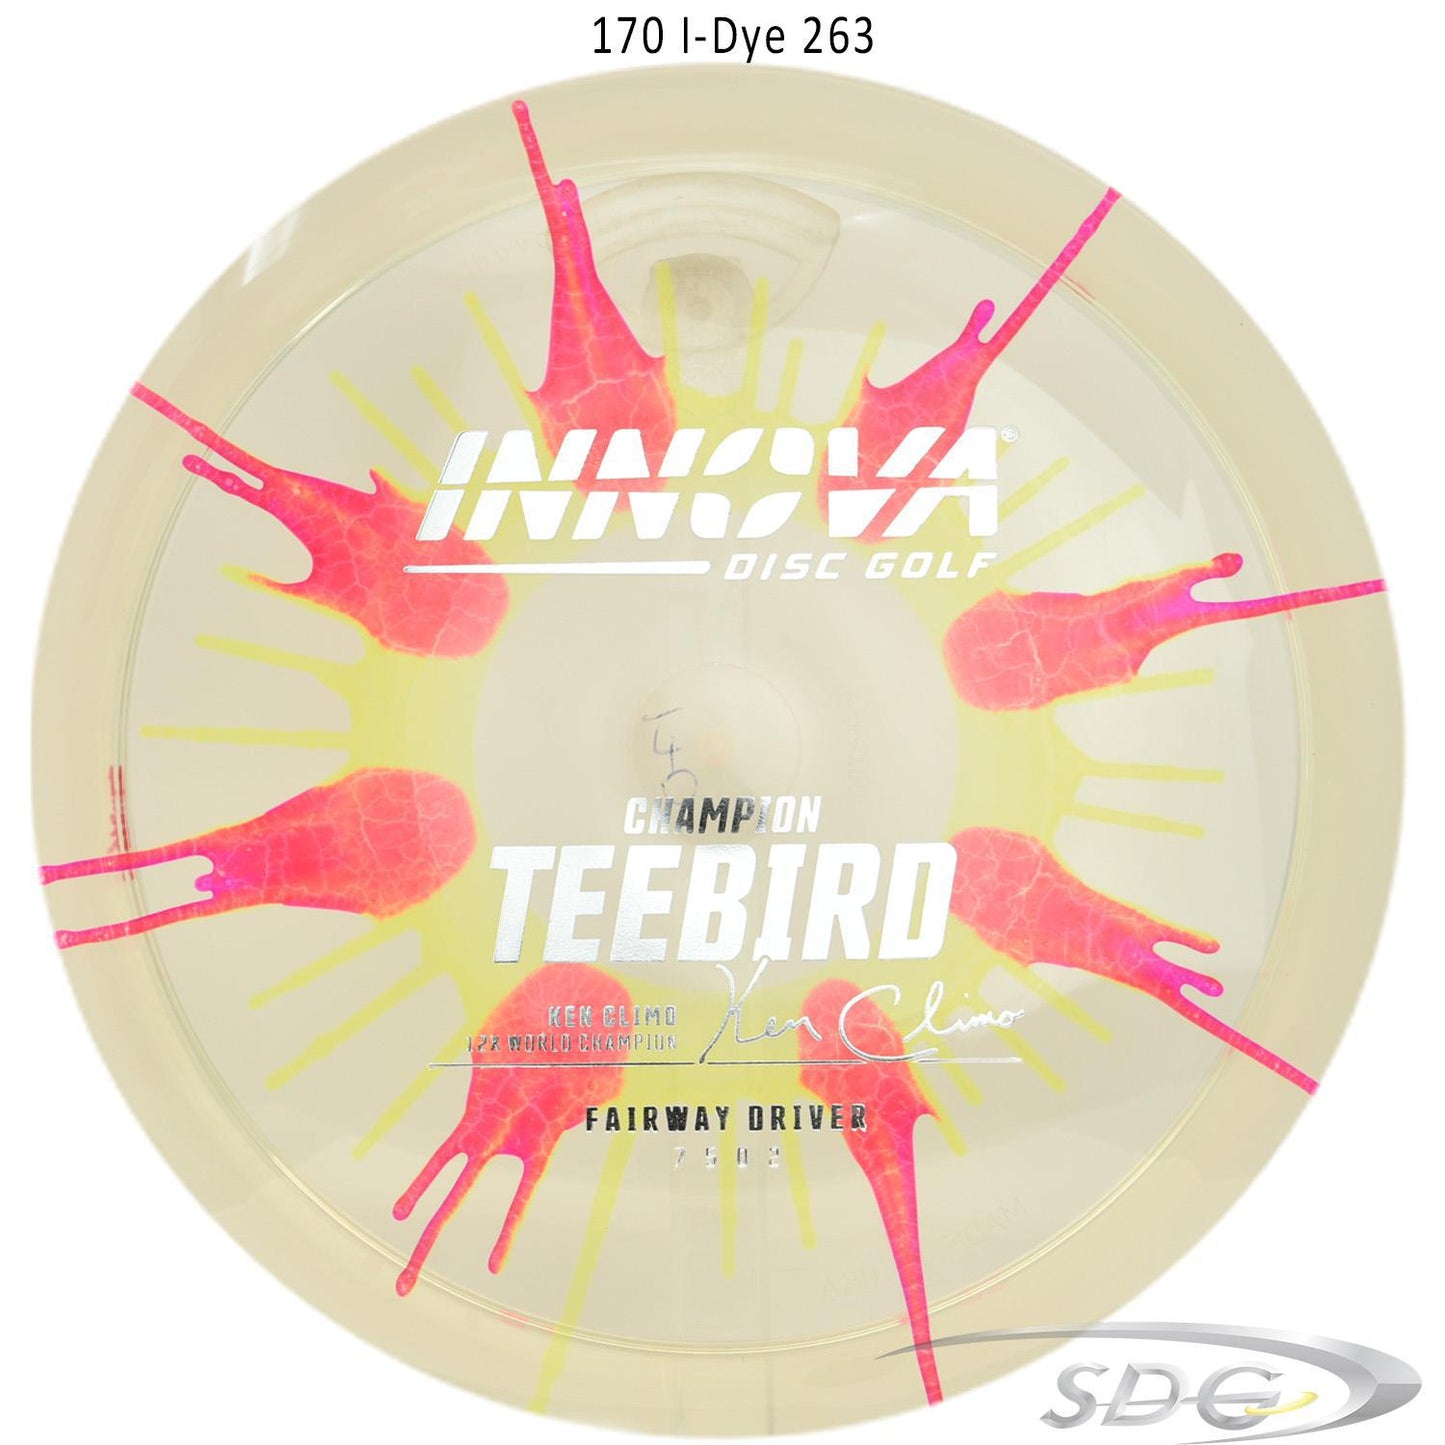 innova-champion-teebird-i-dye-disc-golf-fairway-driver 170 I-Dye 263 